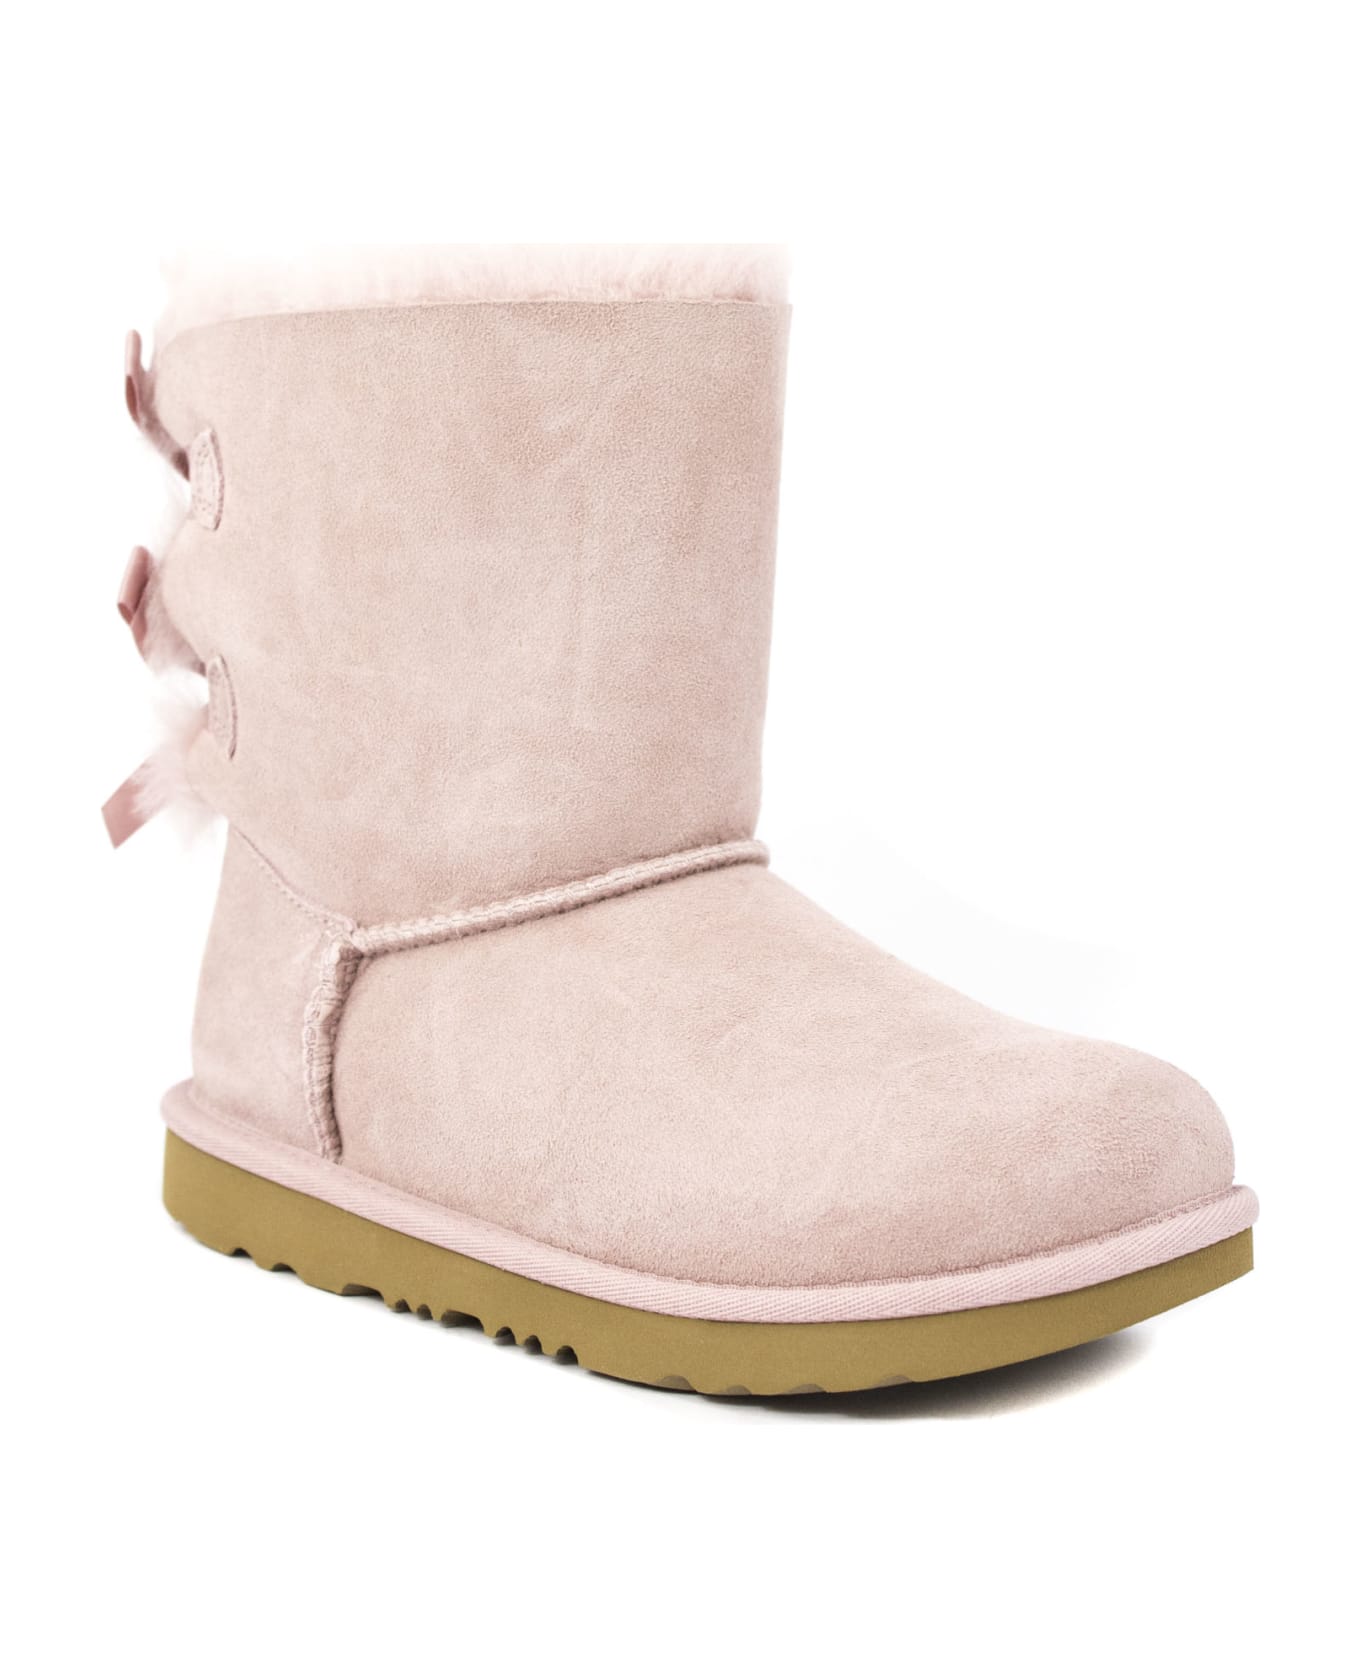 UGG Boots In Pink Sheepskin | italist